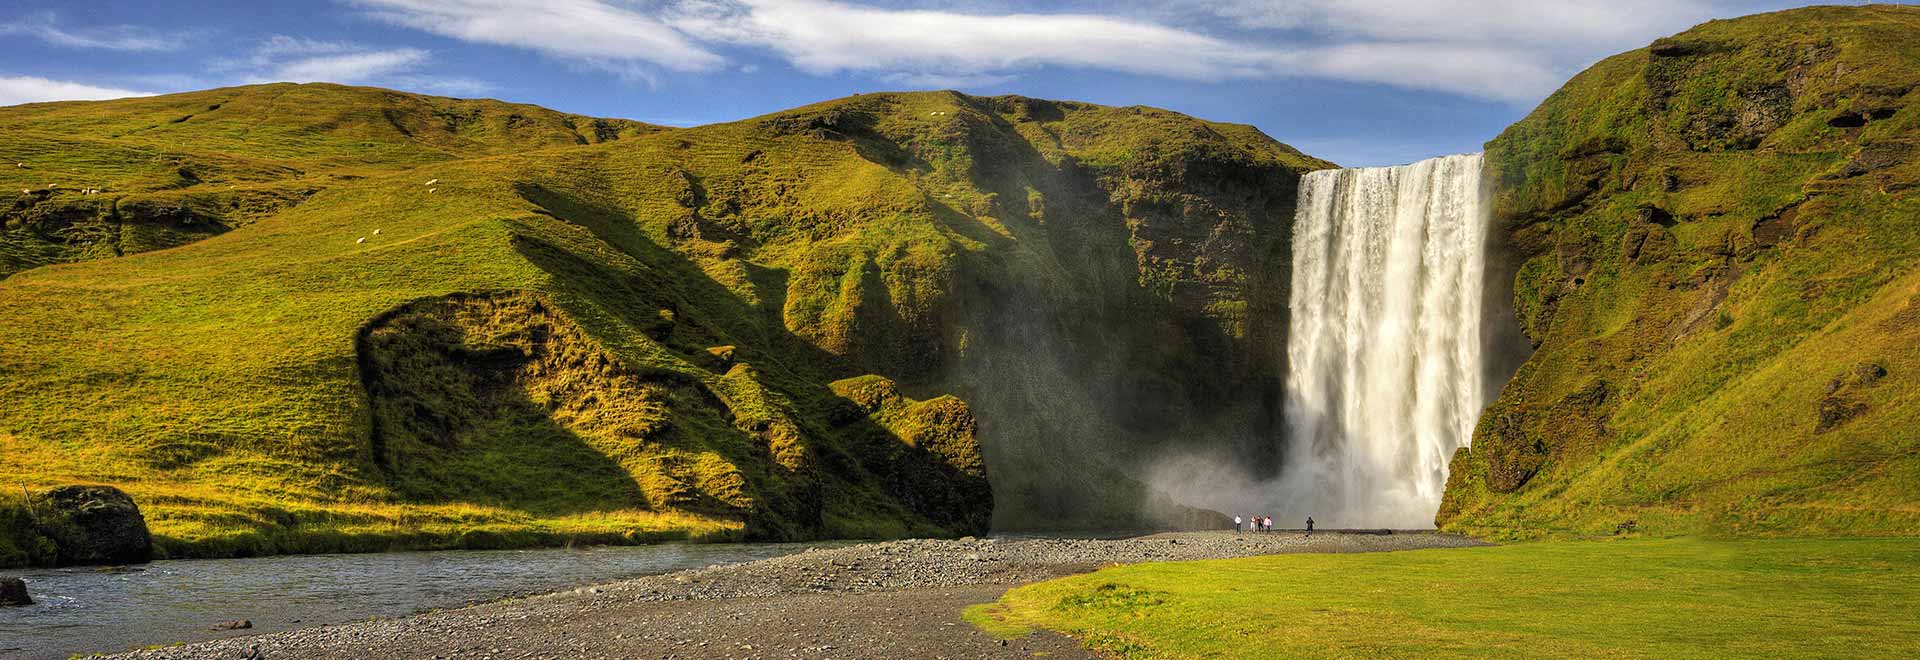 Europe Iceland Skogar Skogafoss Waterfall